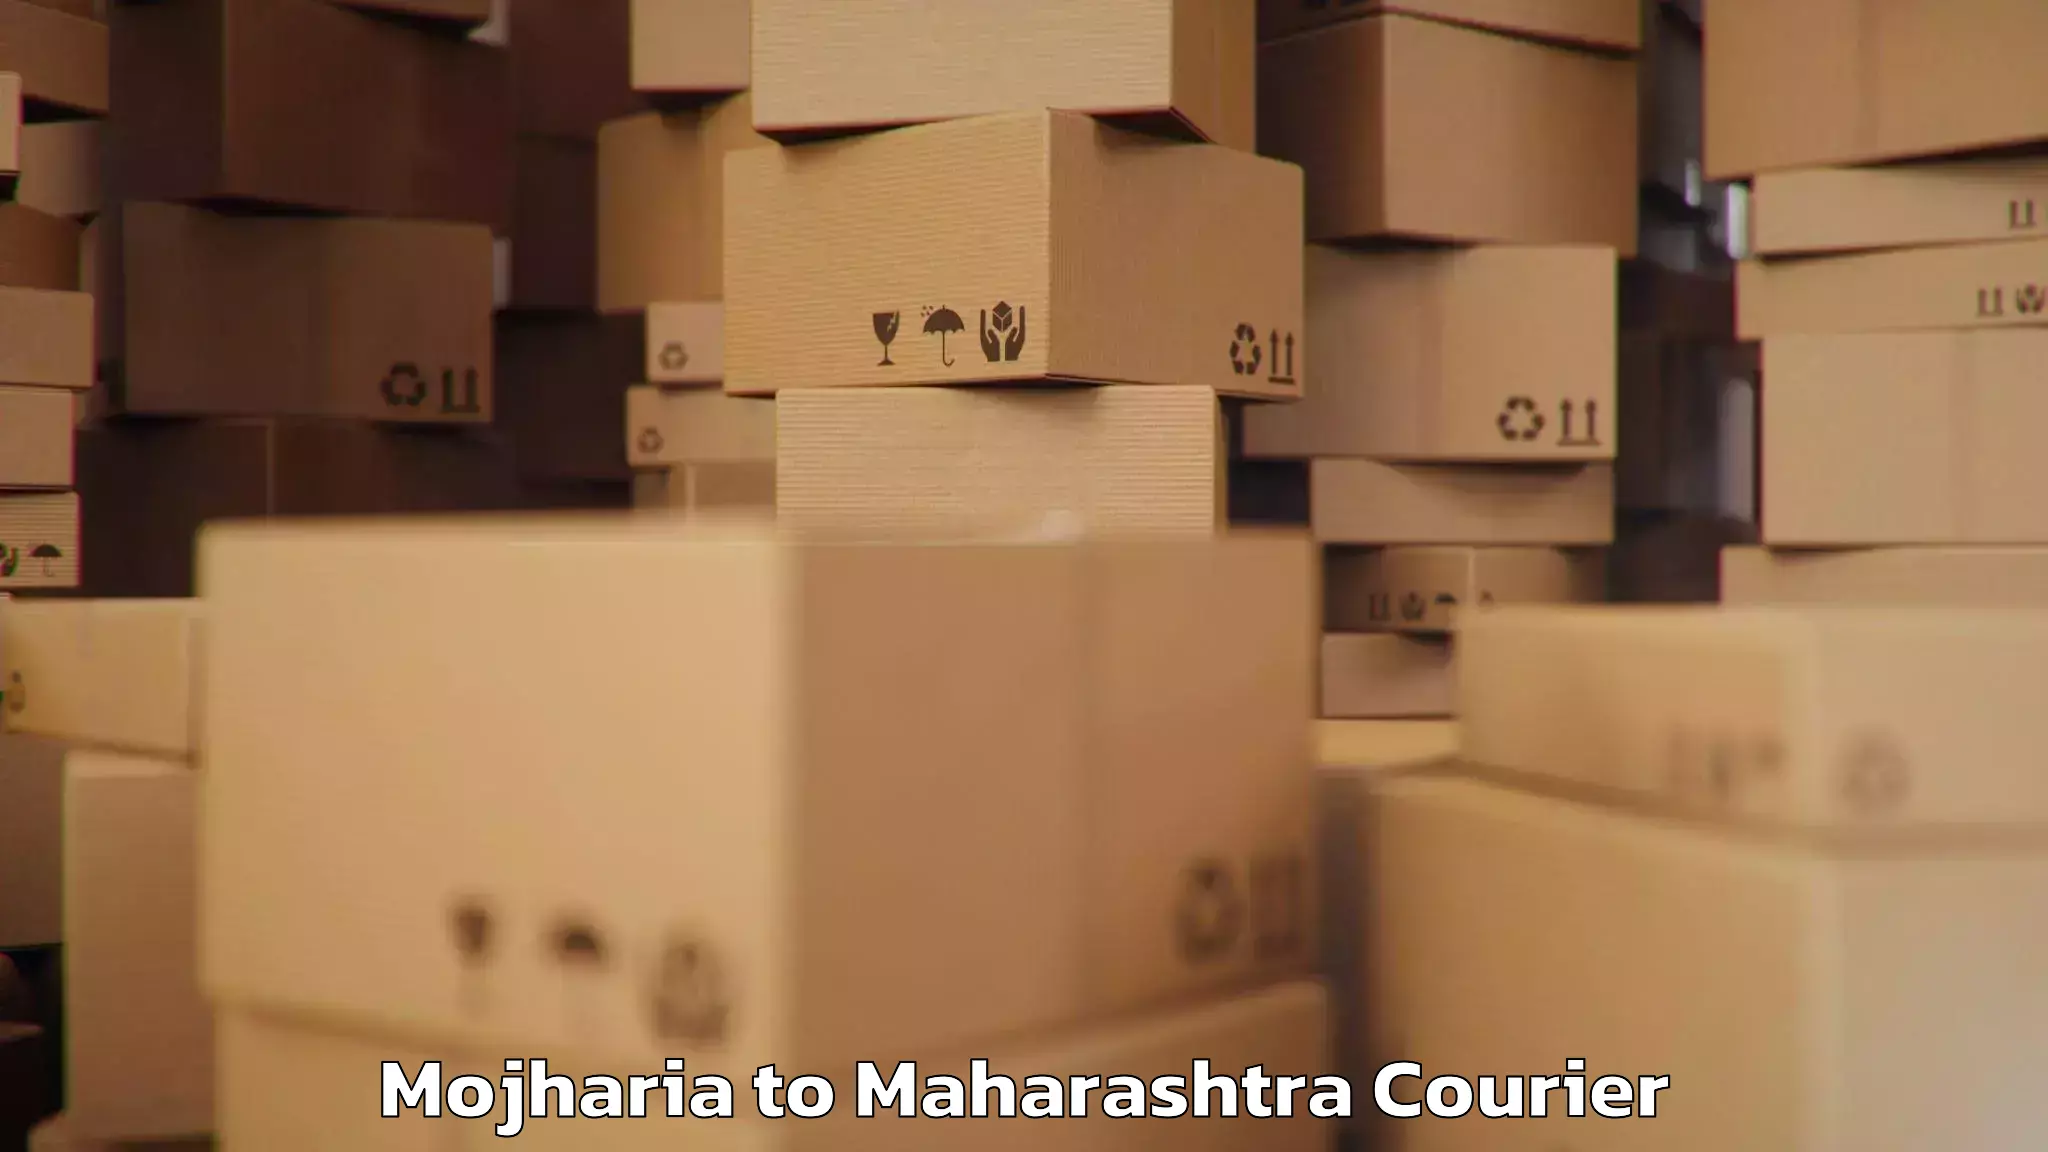 Baggage shipping service Mojharia to Maharashtra